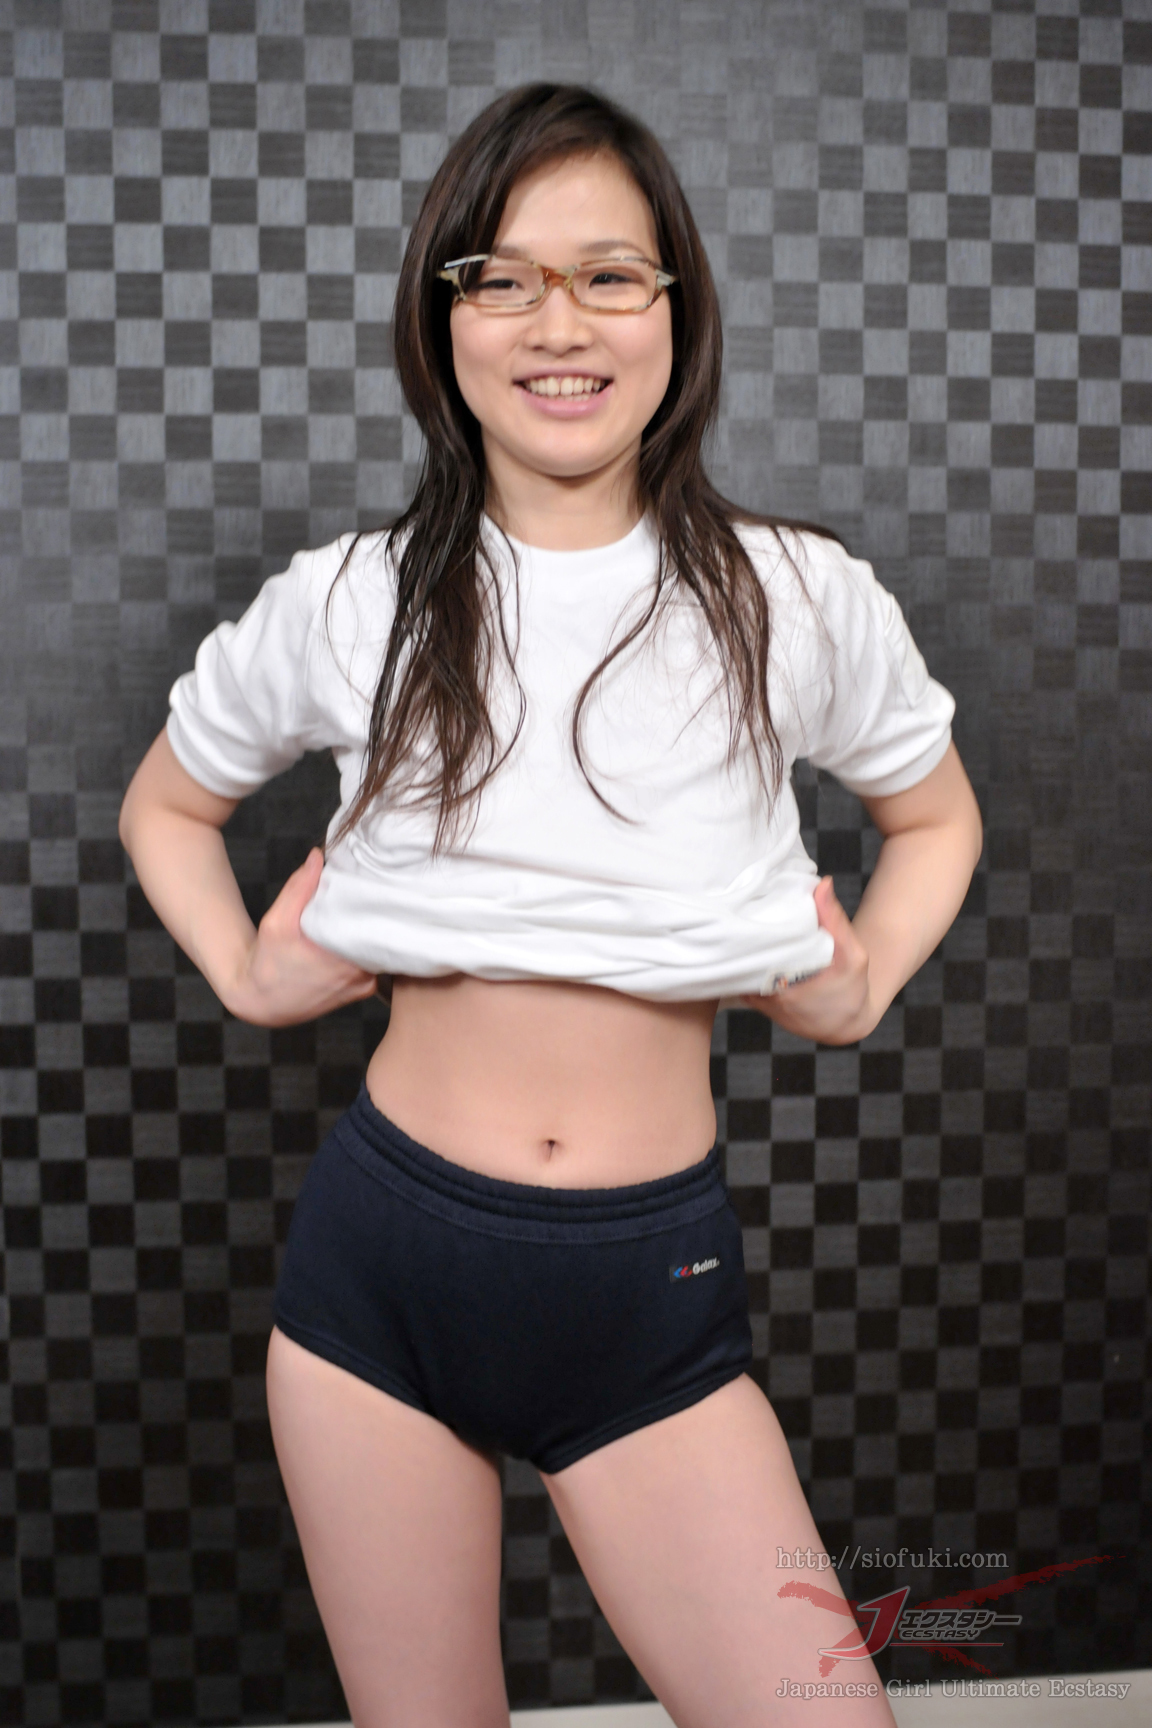 Japan Nerd Nude - Japanese teen Yui Shirasagi likes spandex